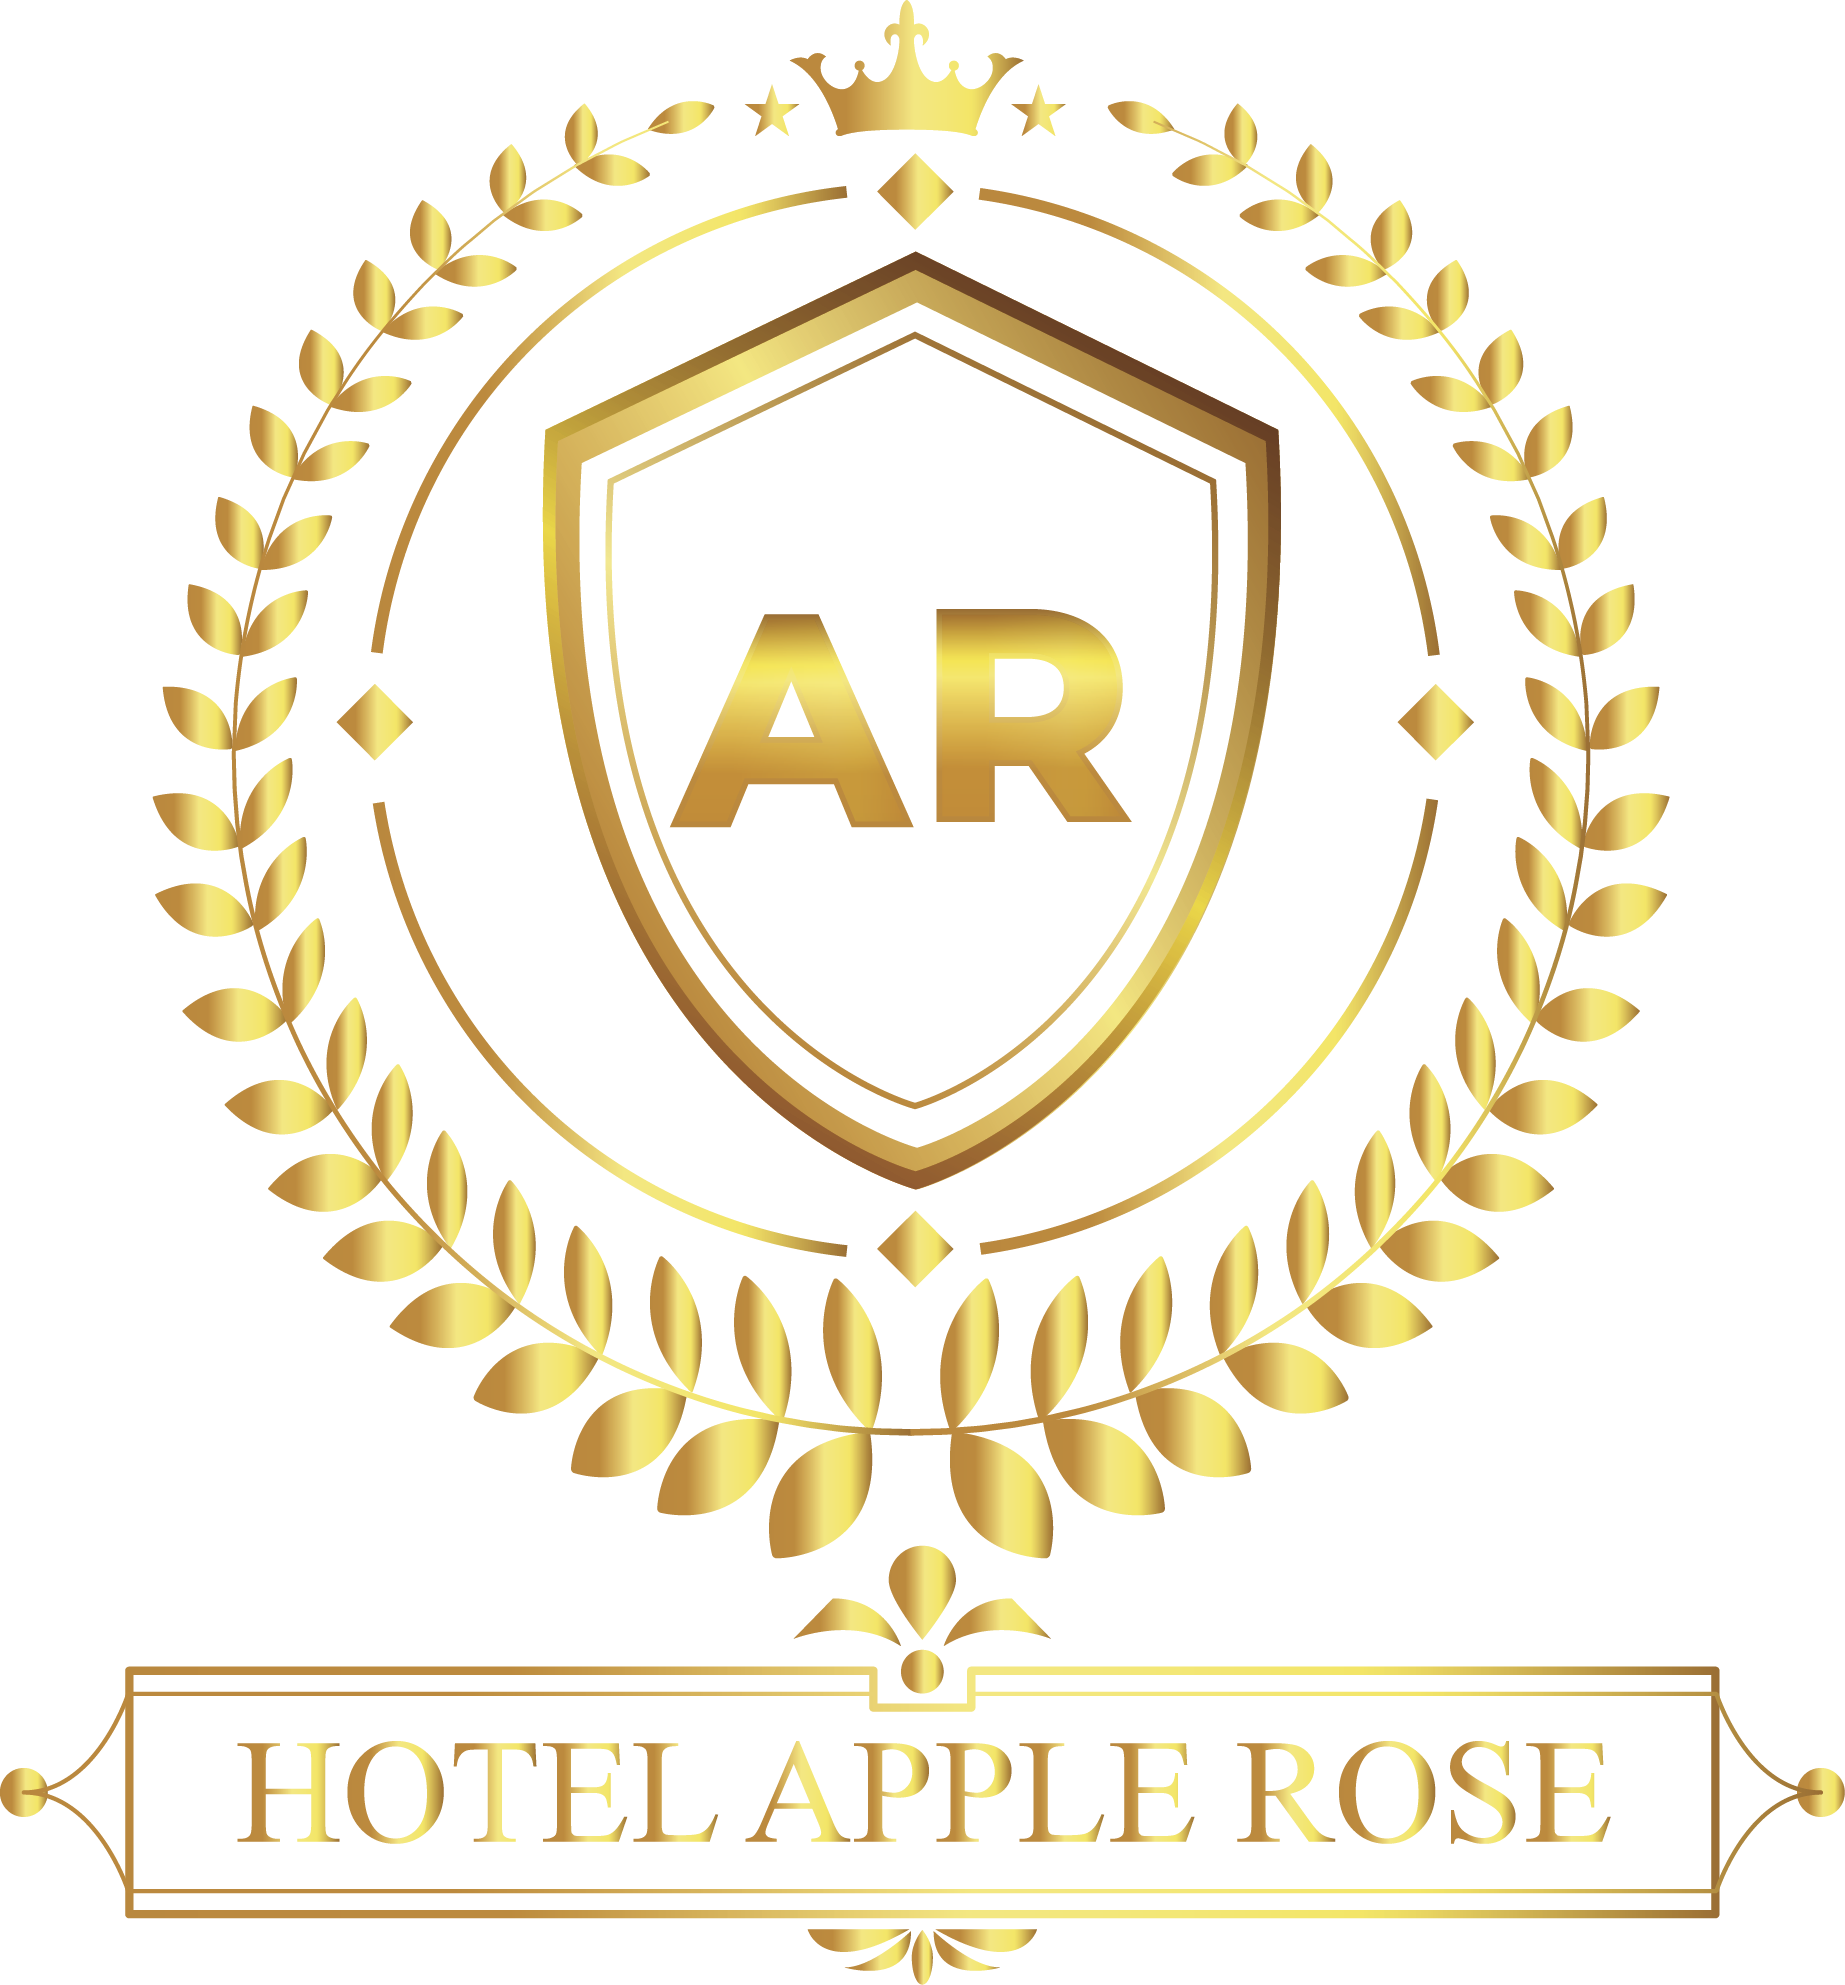 Hotel Apple Rose|Resort|Accomodation